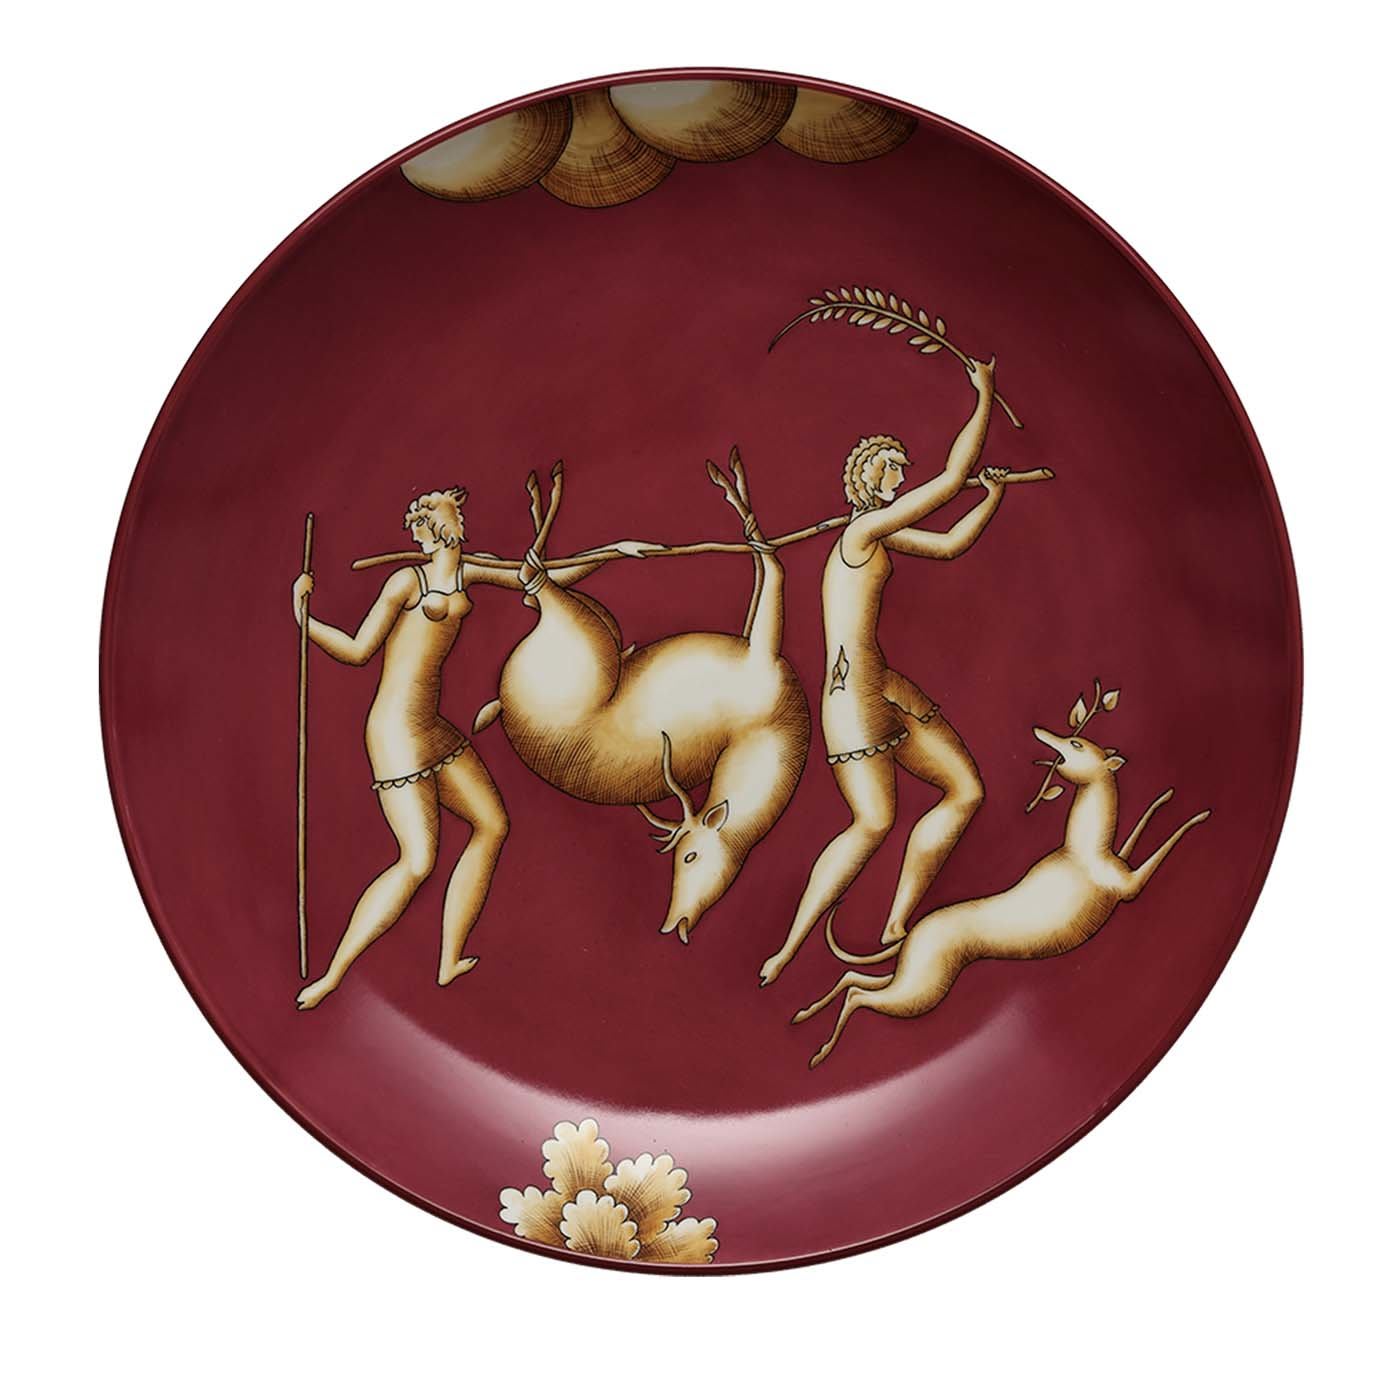 La Venatoria Red Deer Plate - Limited Edition - GINORI 1735